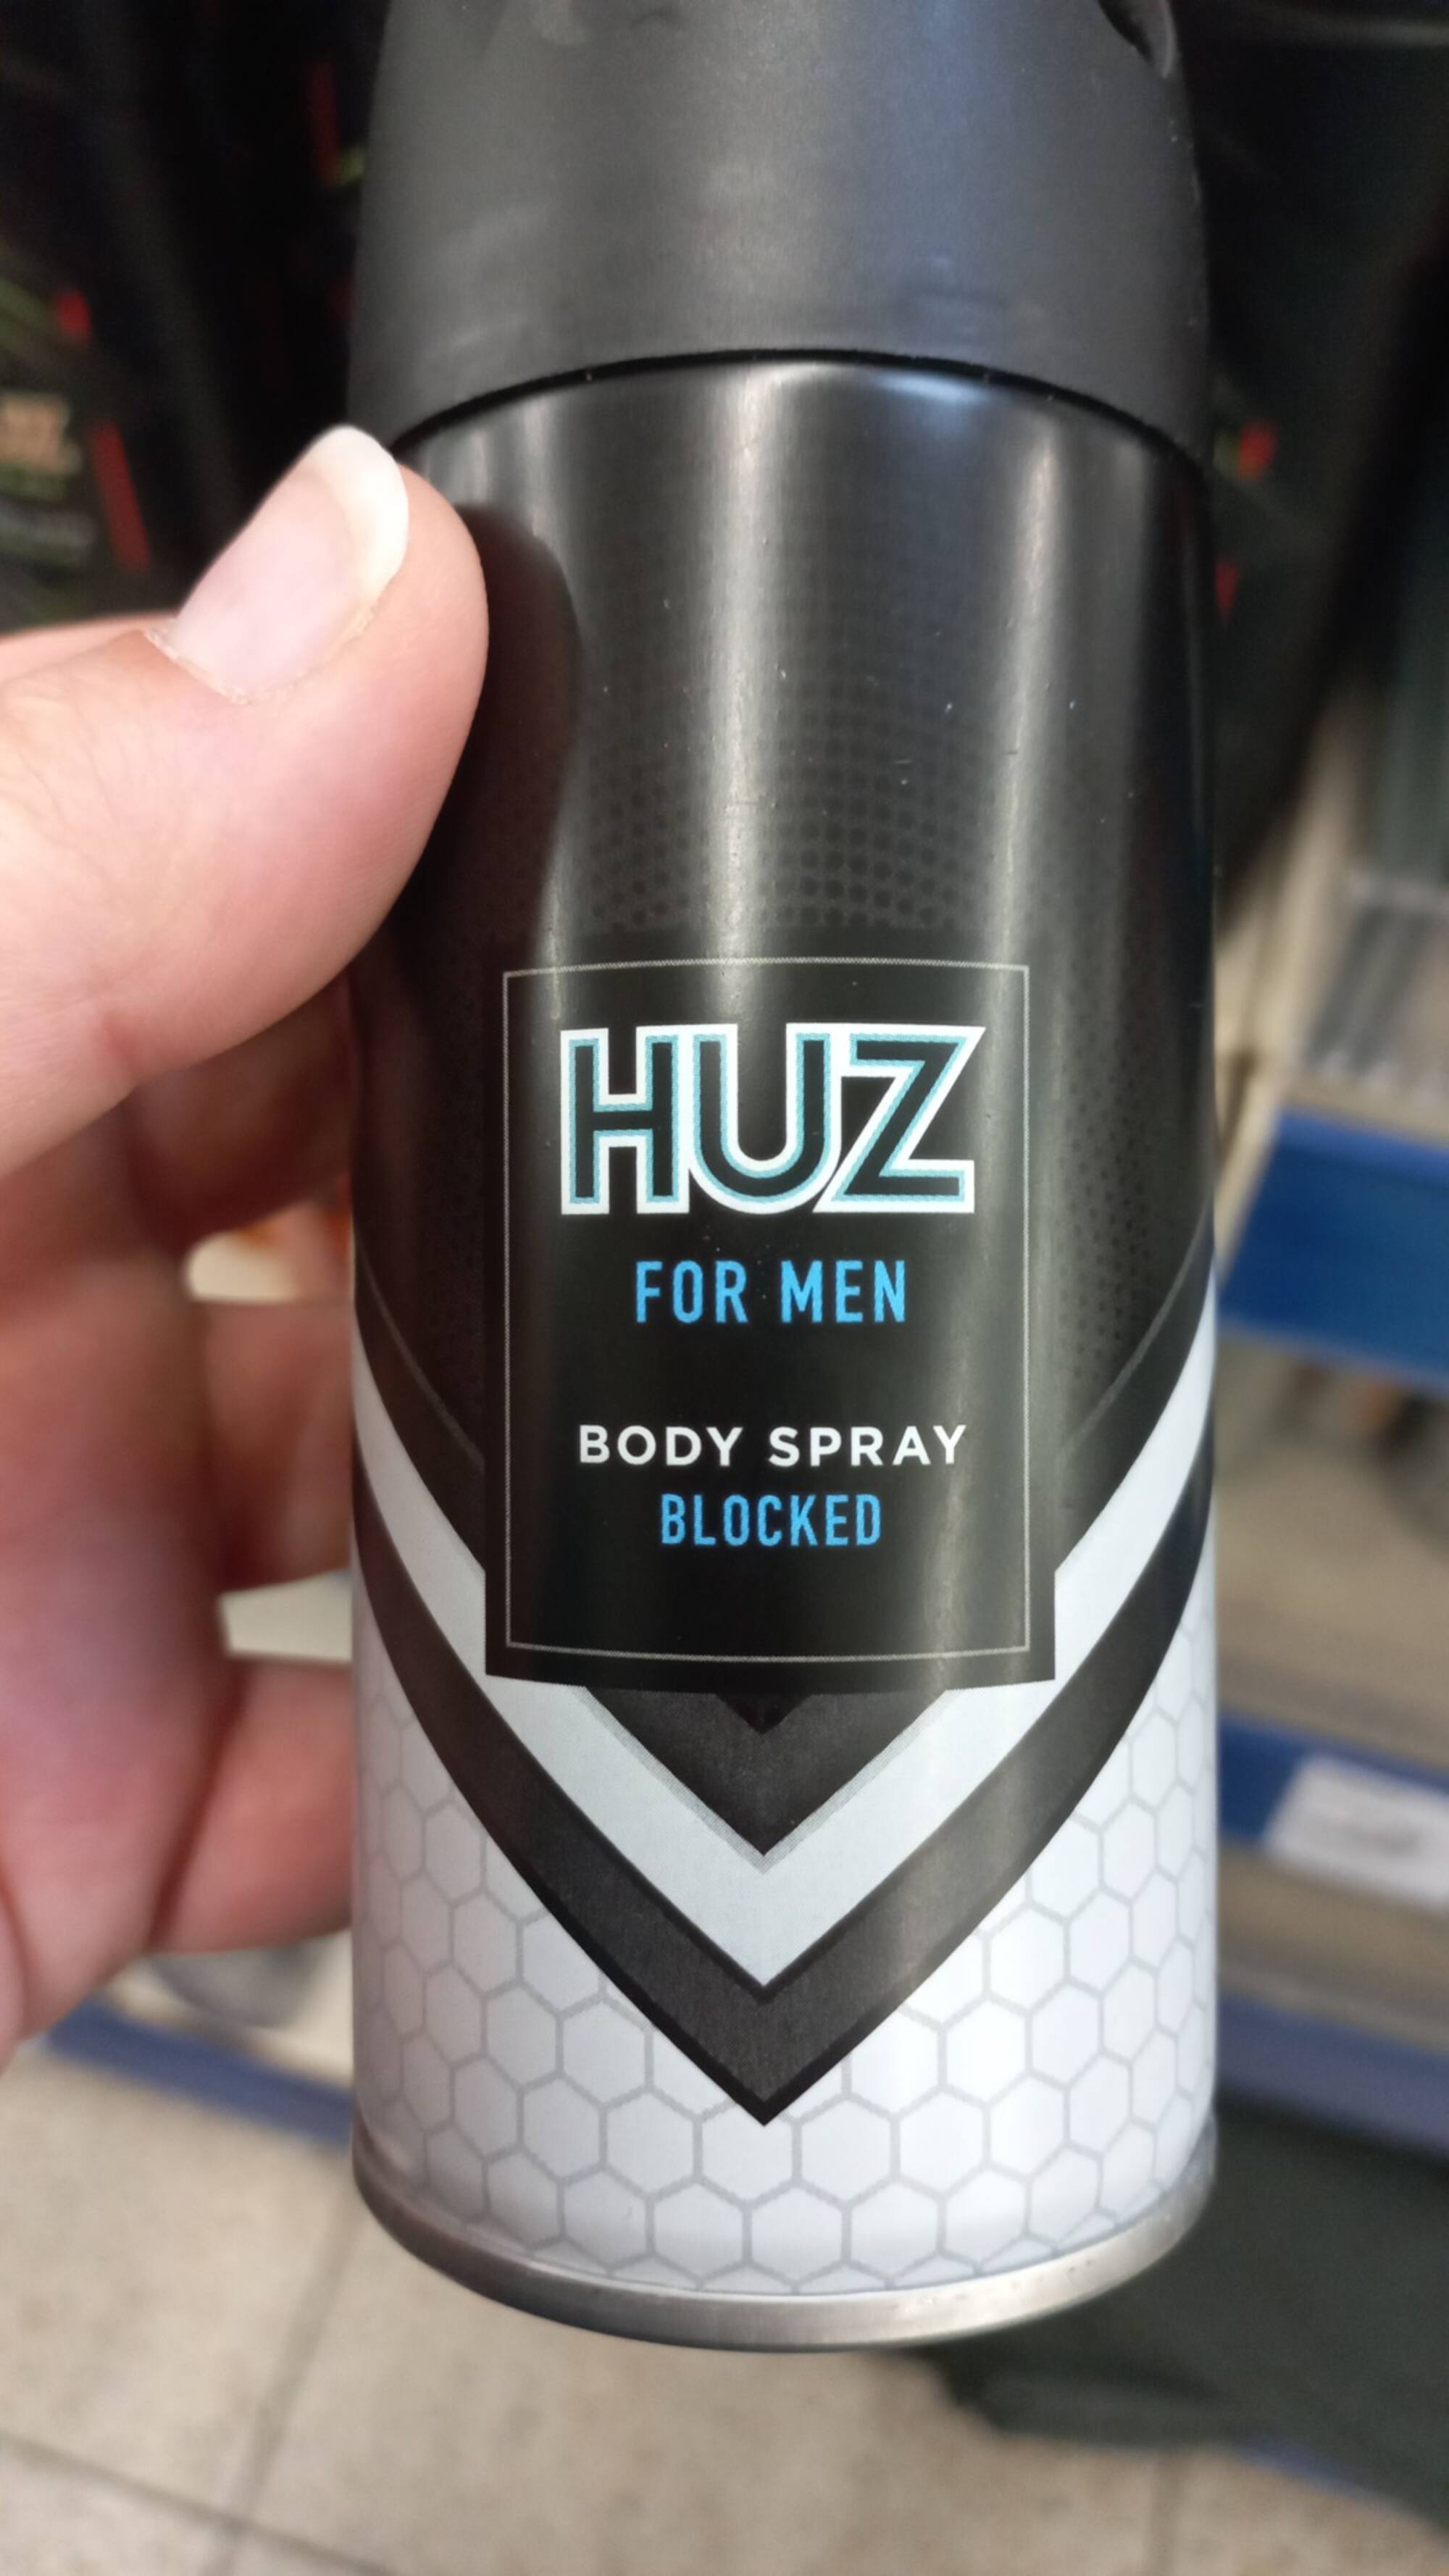 HUZ - Body spray blocked for men